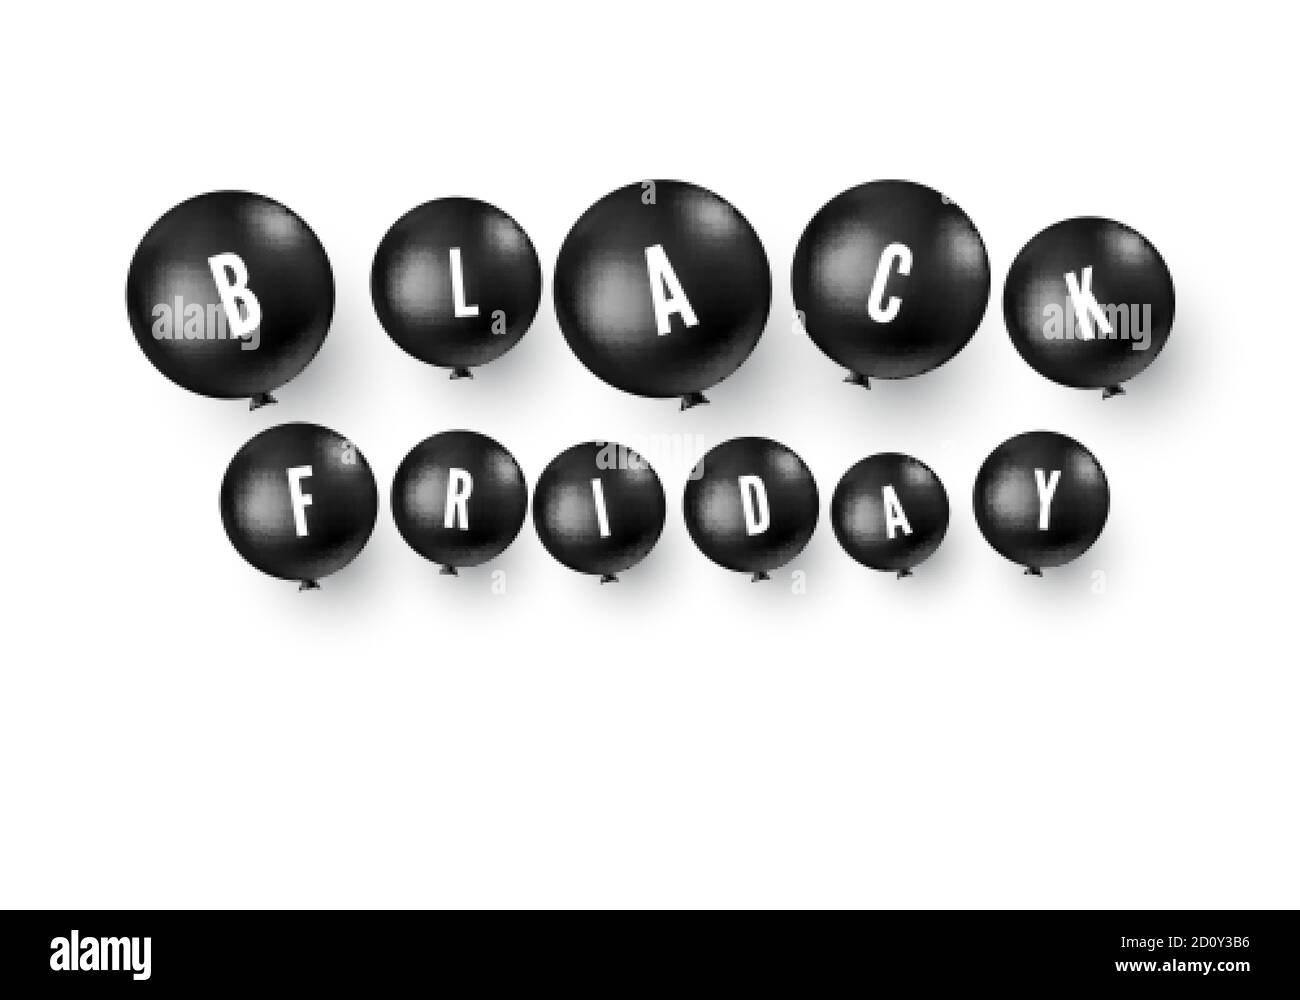 Black friday tag. Black balloons with text - Black Friday. Vector Stock Vector